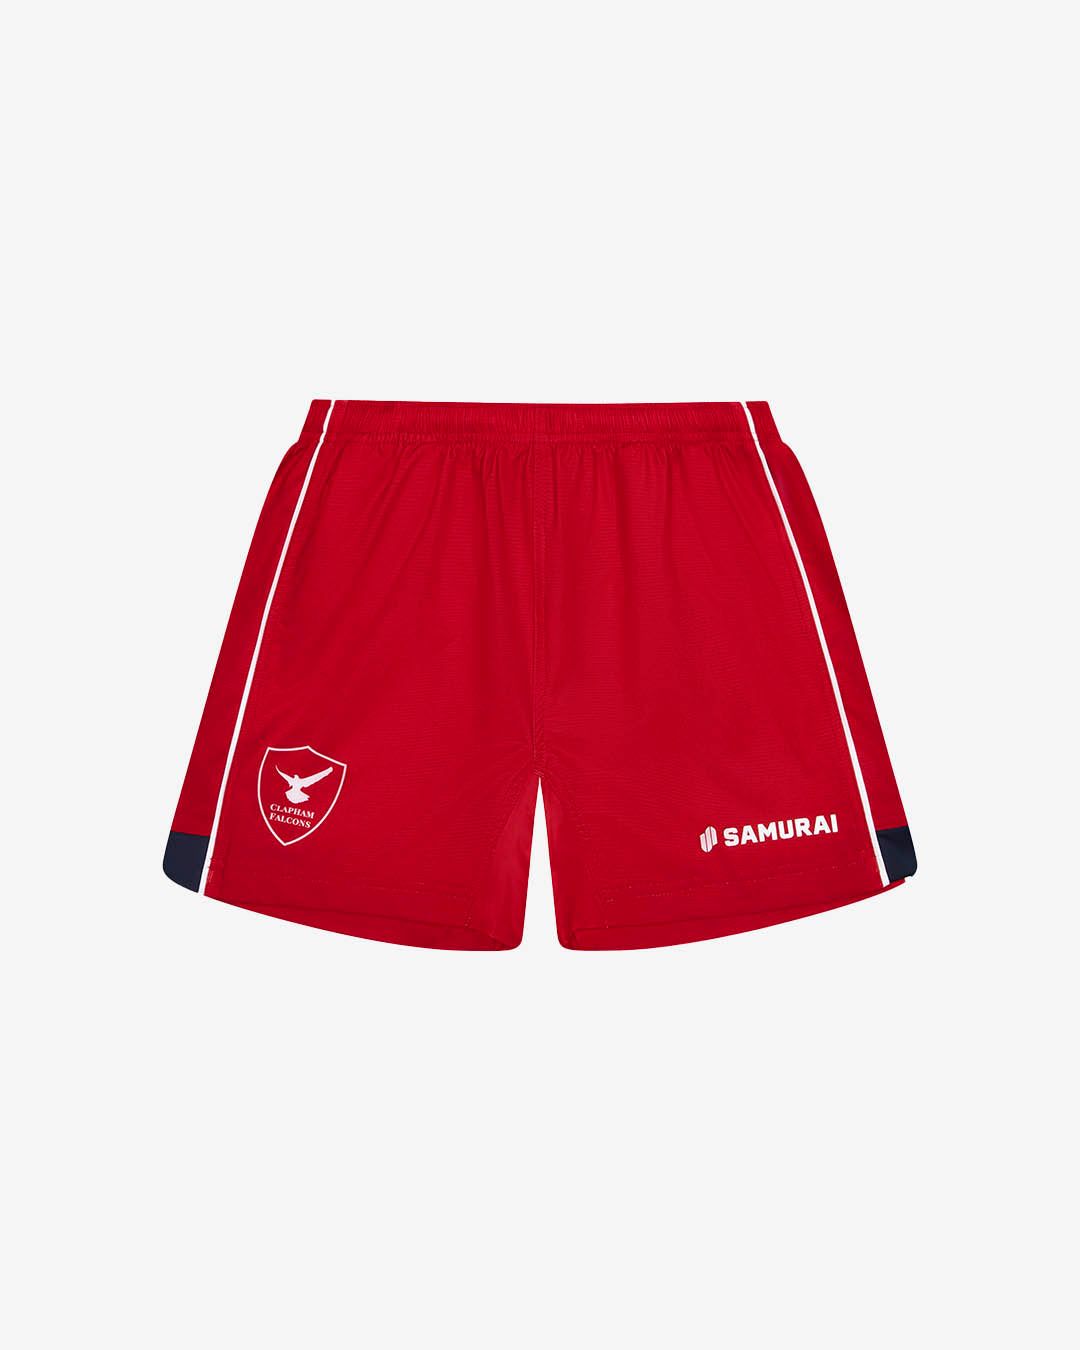 CF:008 - Clapham Falcons Training Shorts - Red